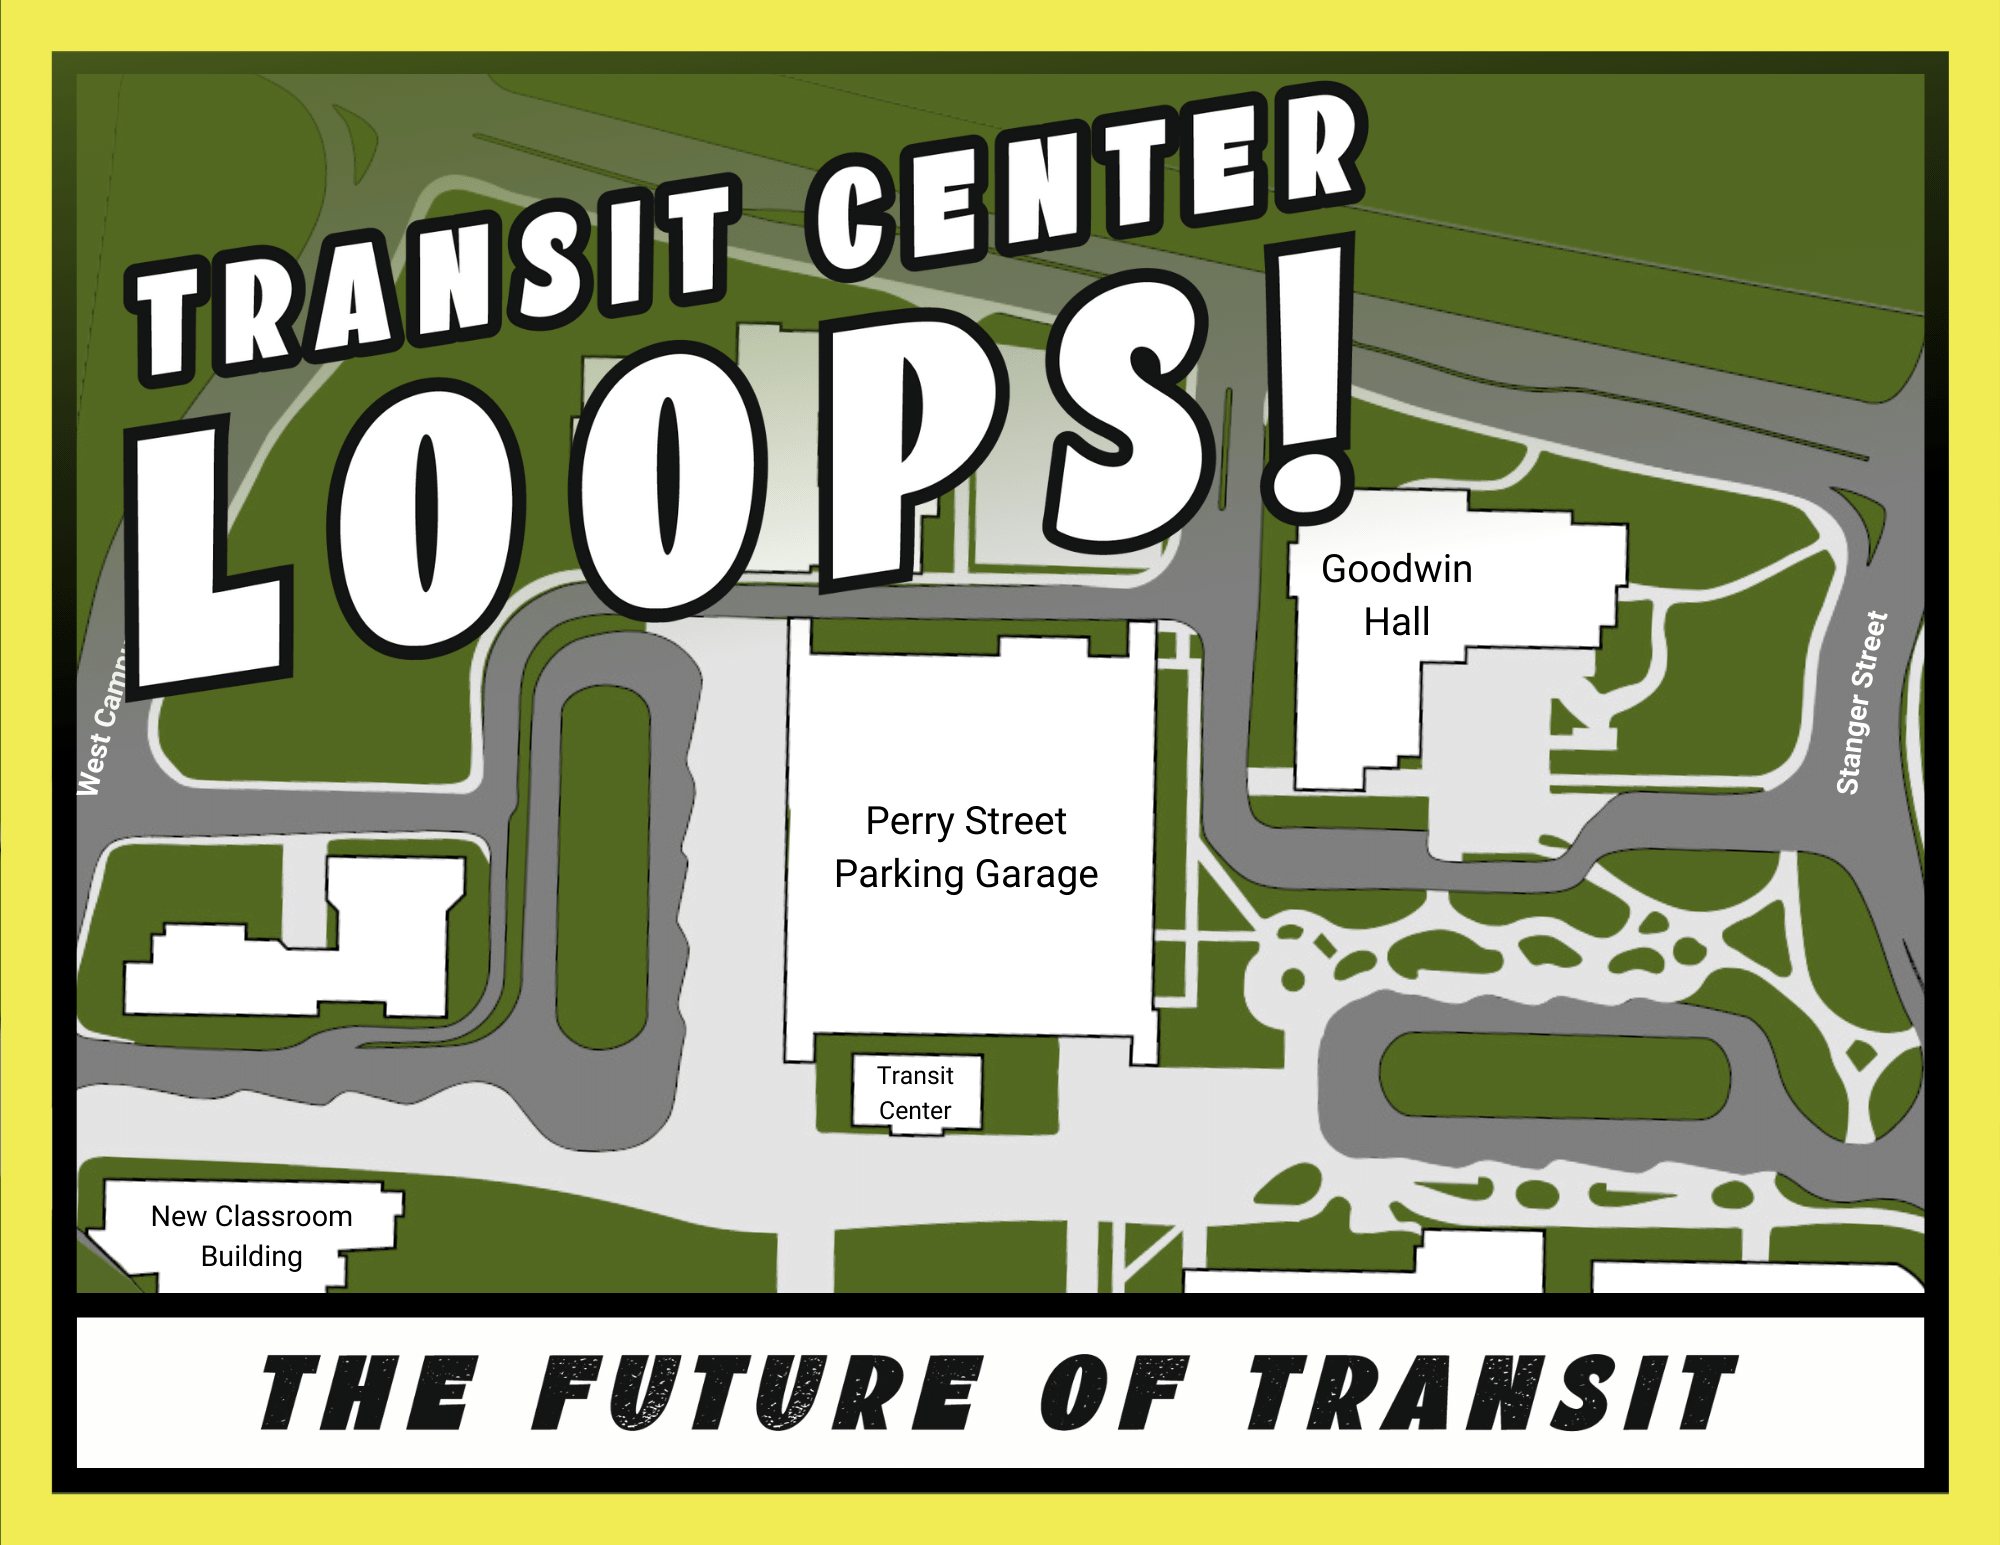 Transit Center Loops 8